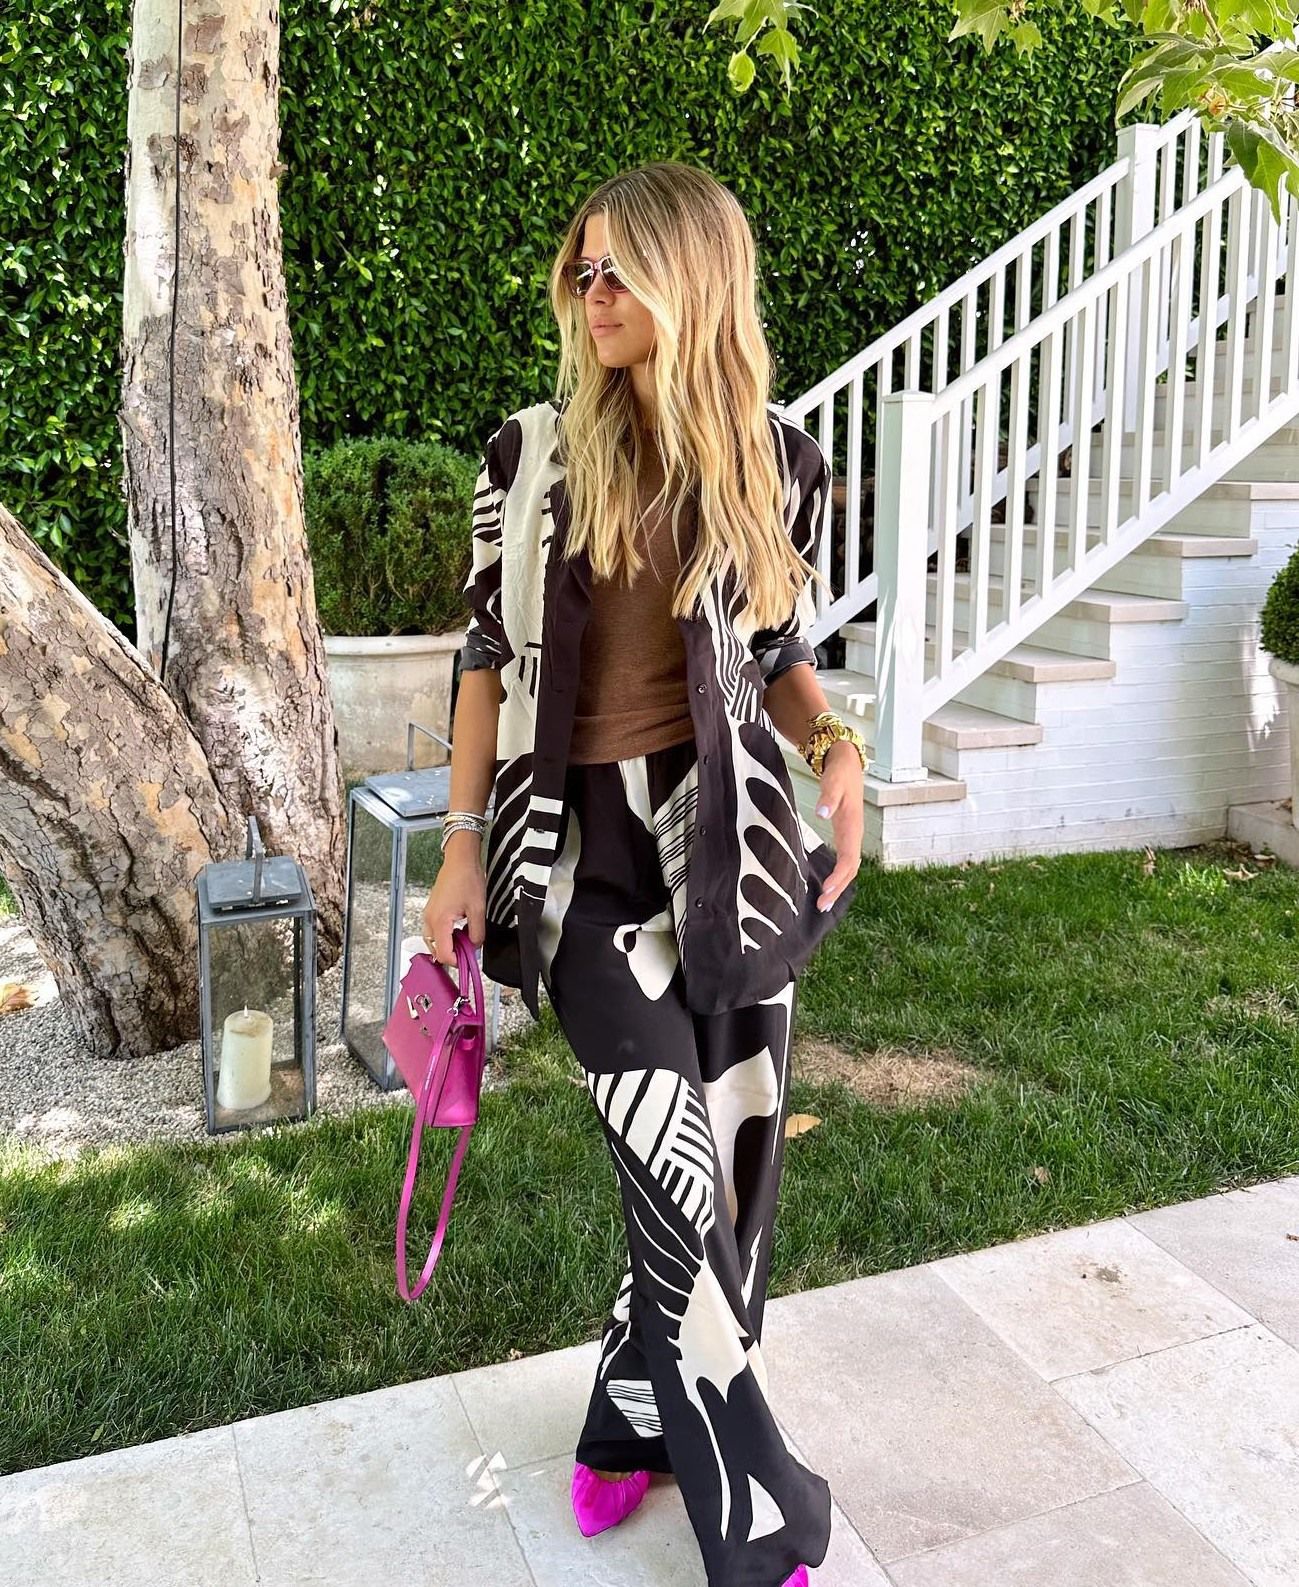 Sofia Richie - Instagram post | Carissa Culiner style